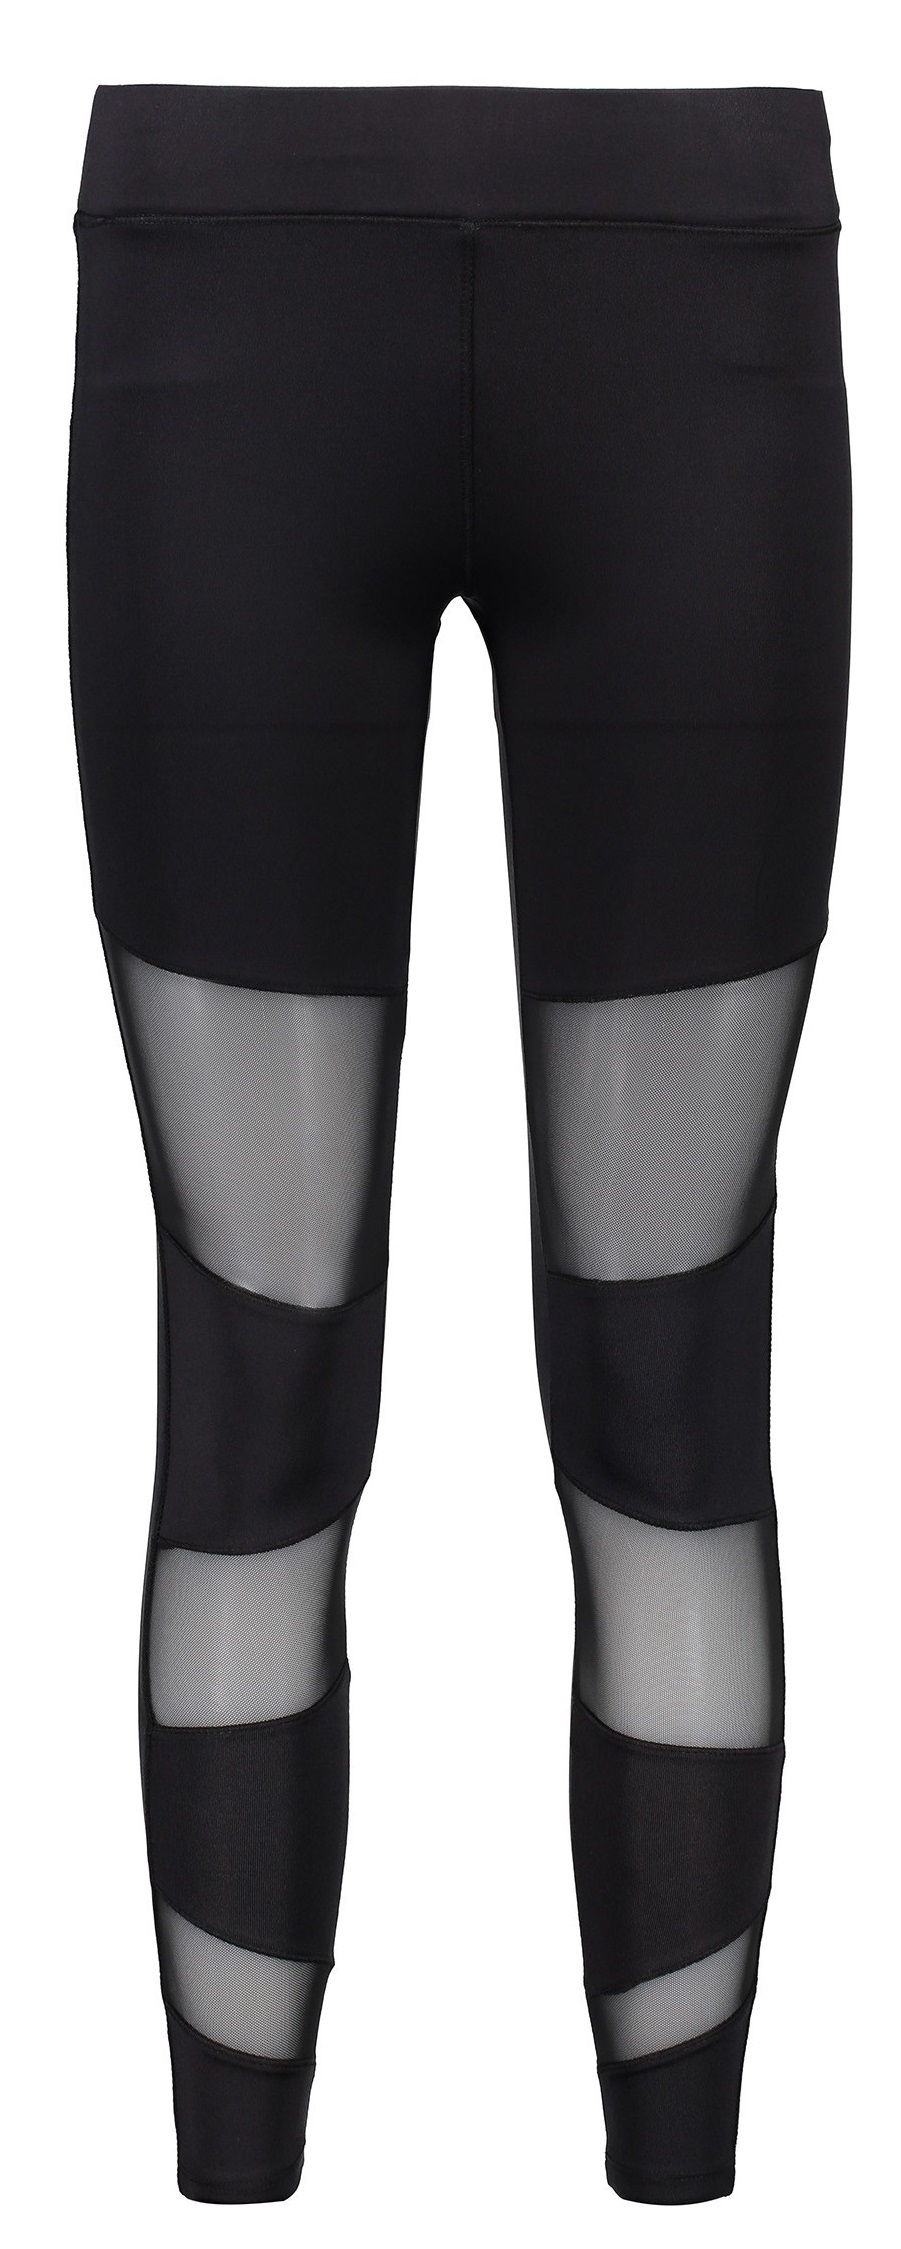 لگ زنانه کوتون-KOTON  لگینگ ورزشی-رنگ مشکی-کد:Black-8KAK42289NK 